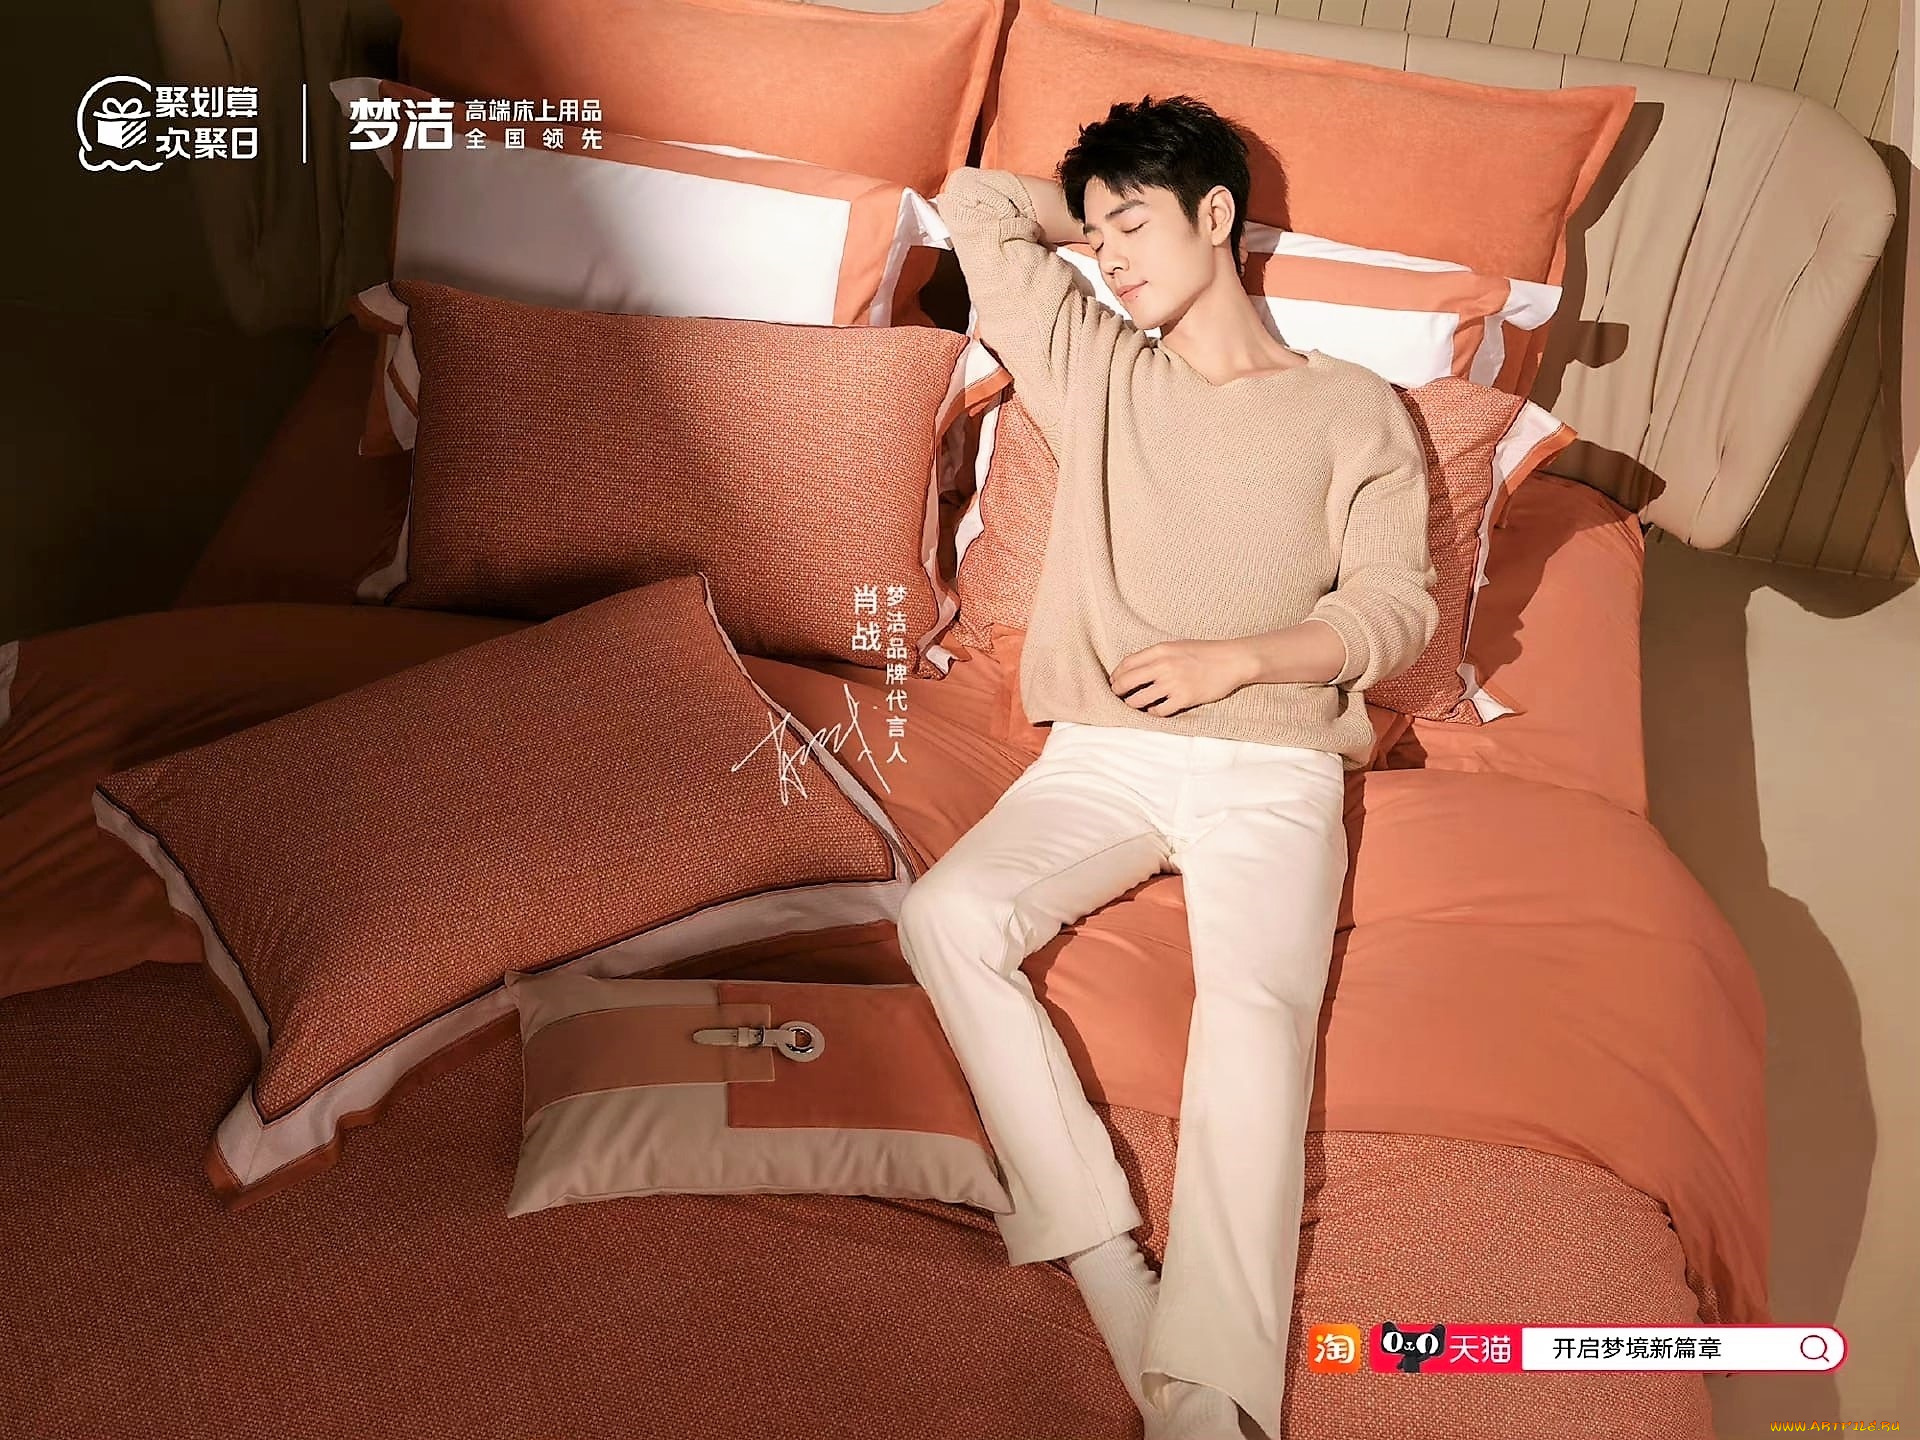 мужчины, xiao, zhan, актер, свитер, кровать, подушки